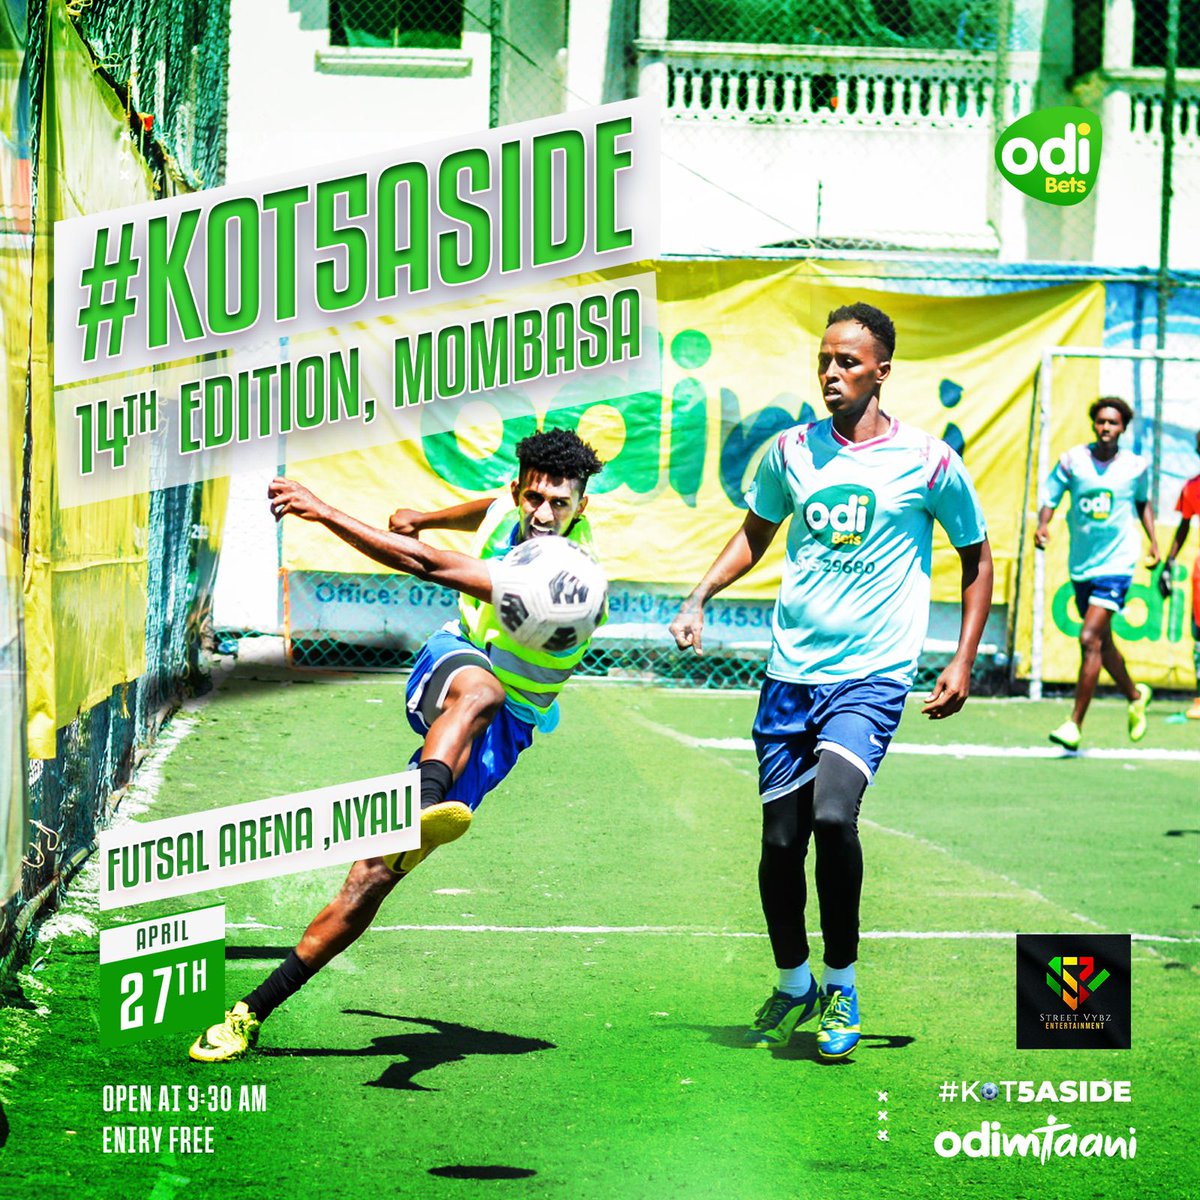 #KOT5Aside Mombasa Edition 👌🏿